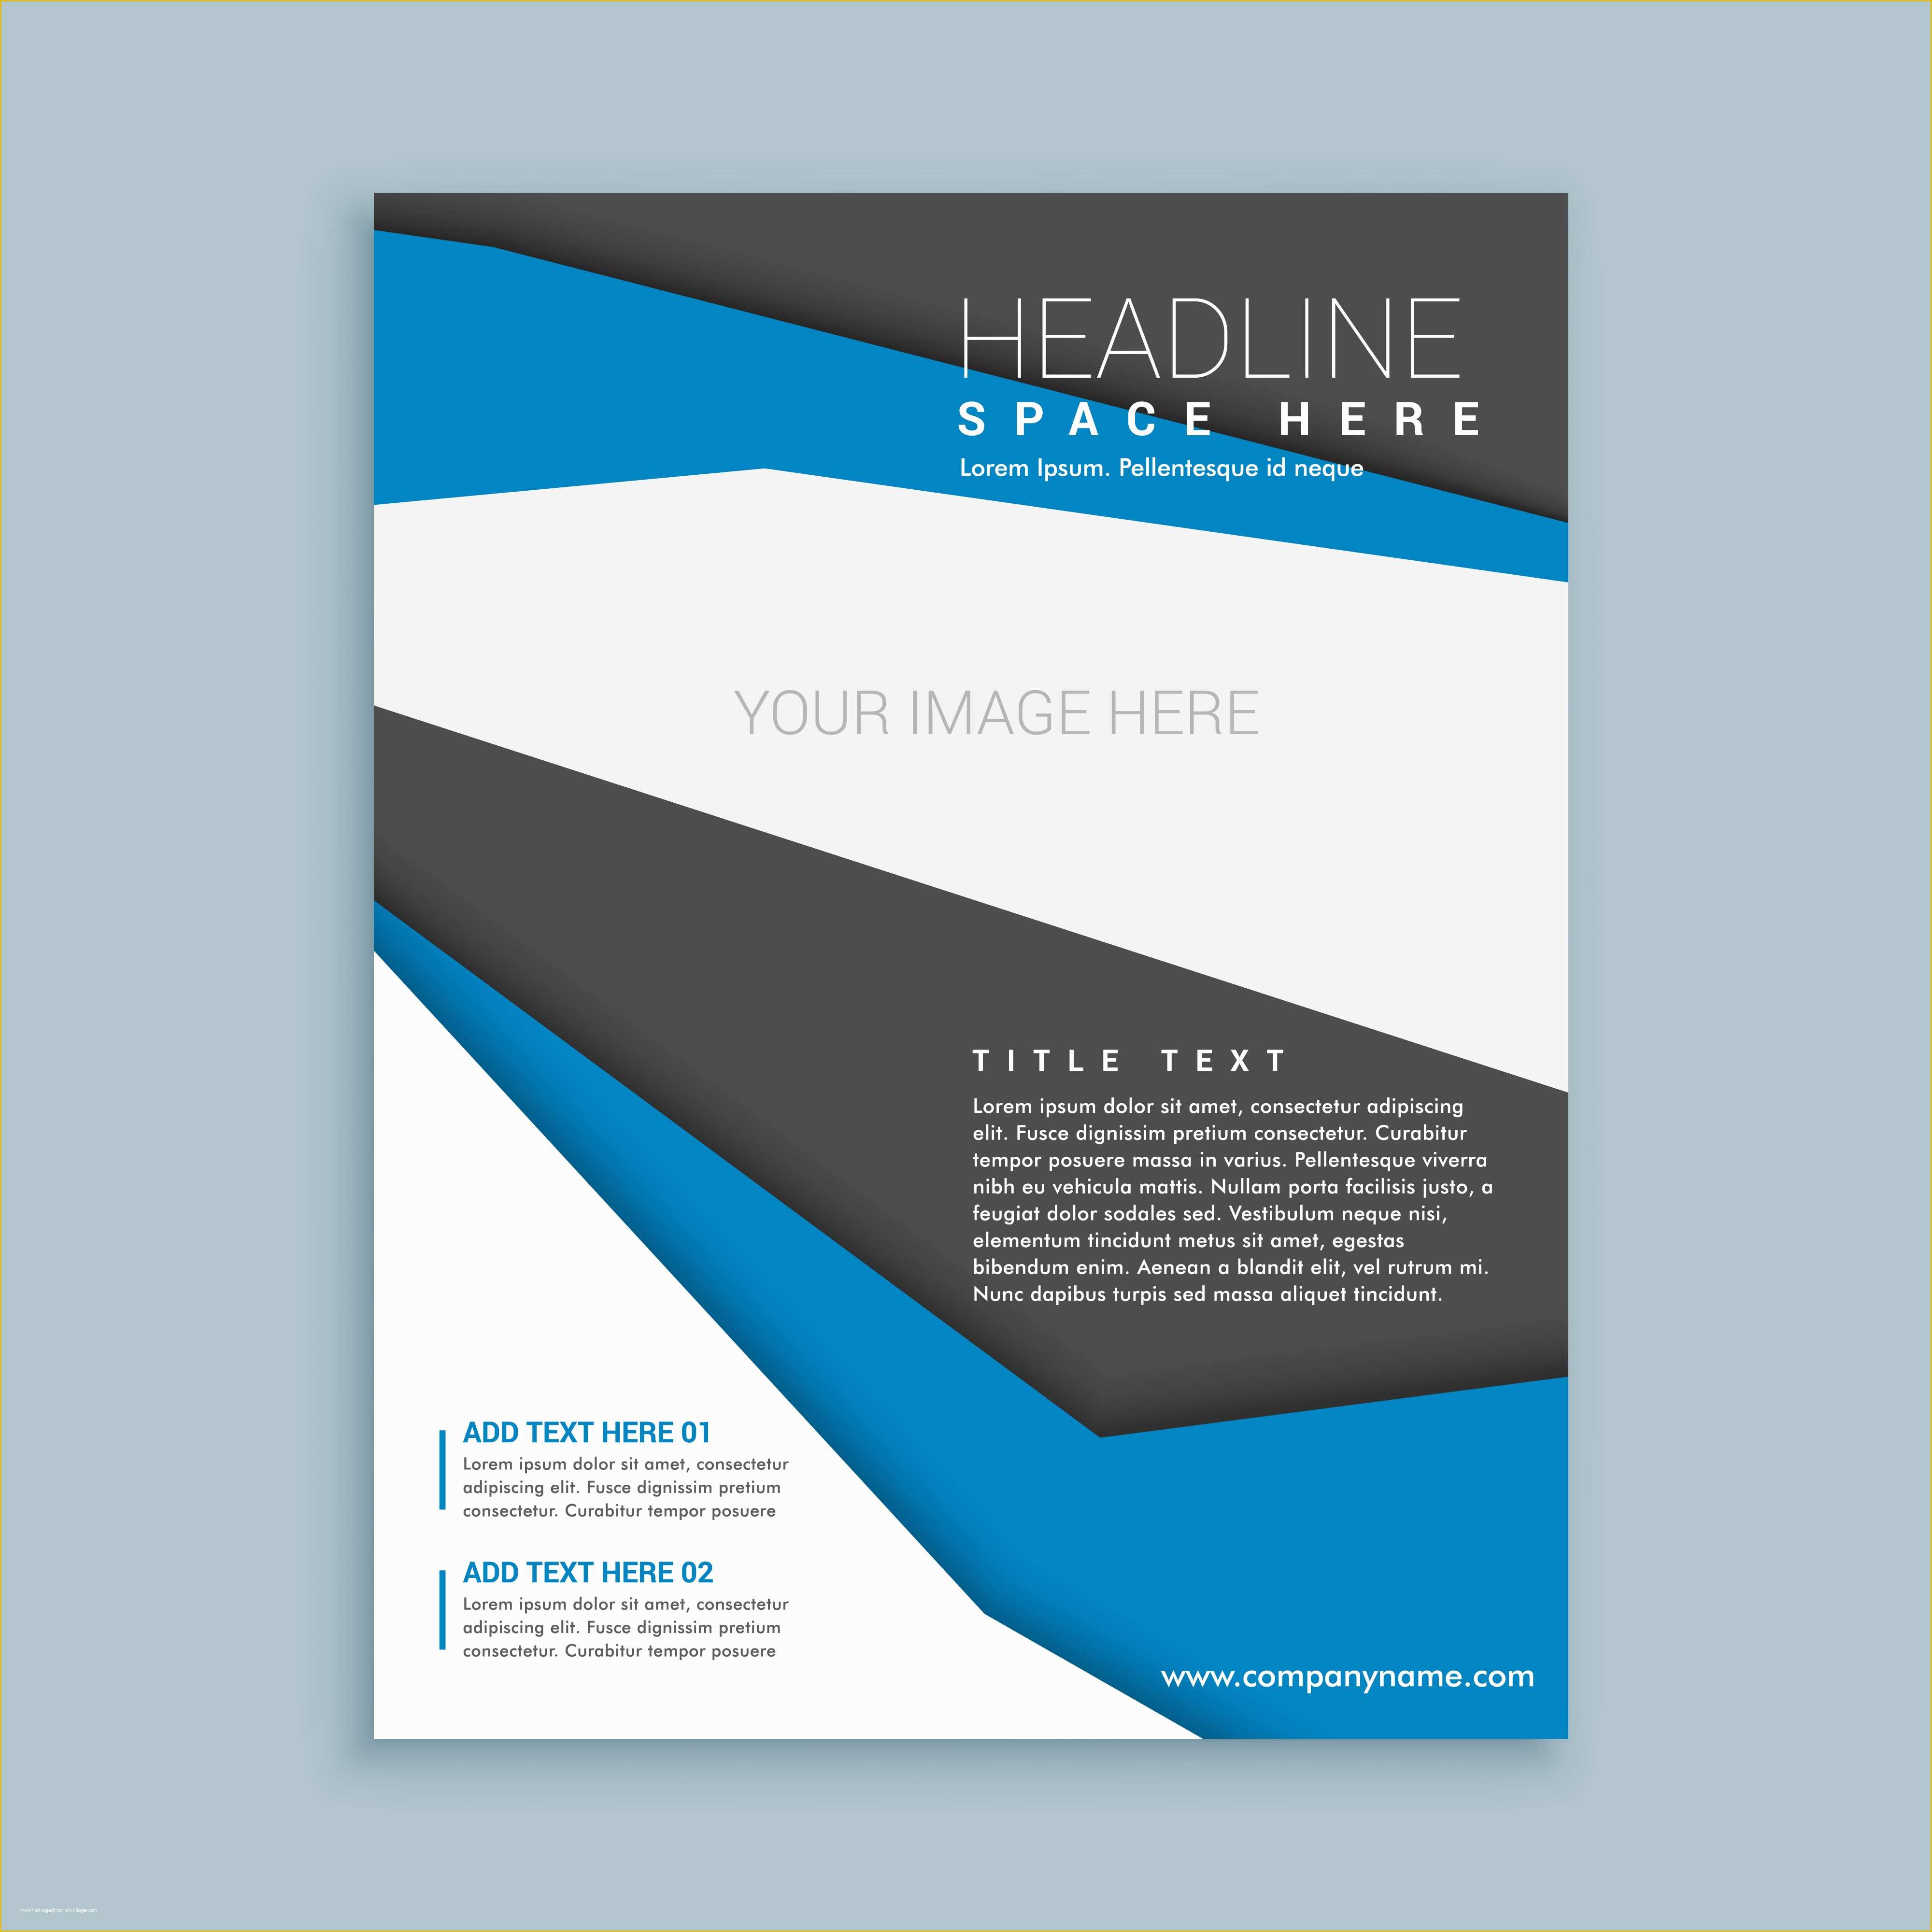 Folder Design Template Free Of Modern Brochure Flyer Template Download Free Vector Art